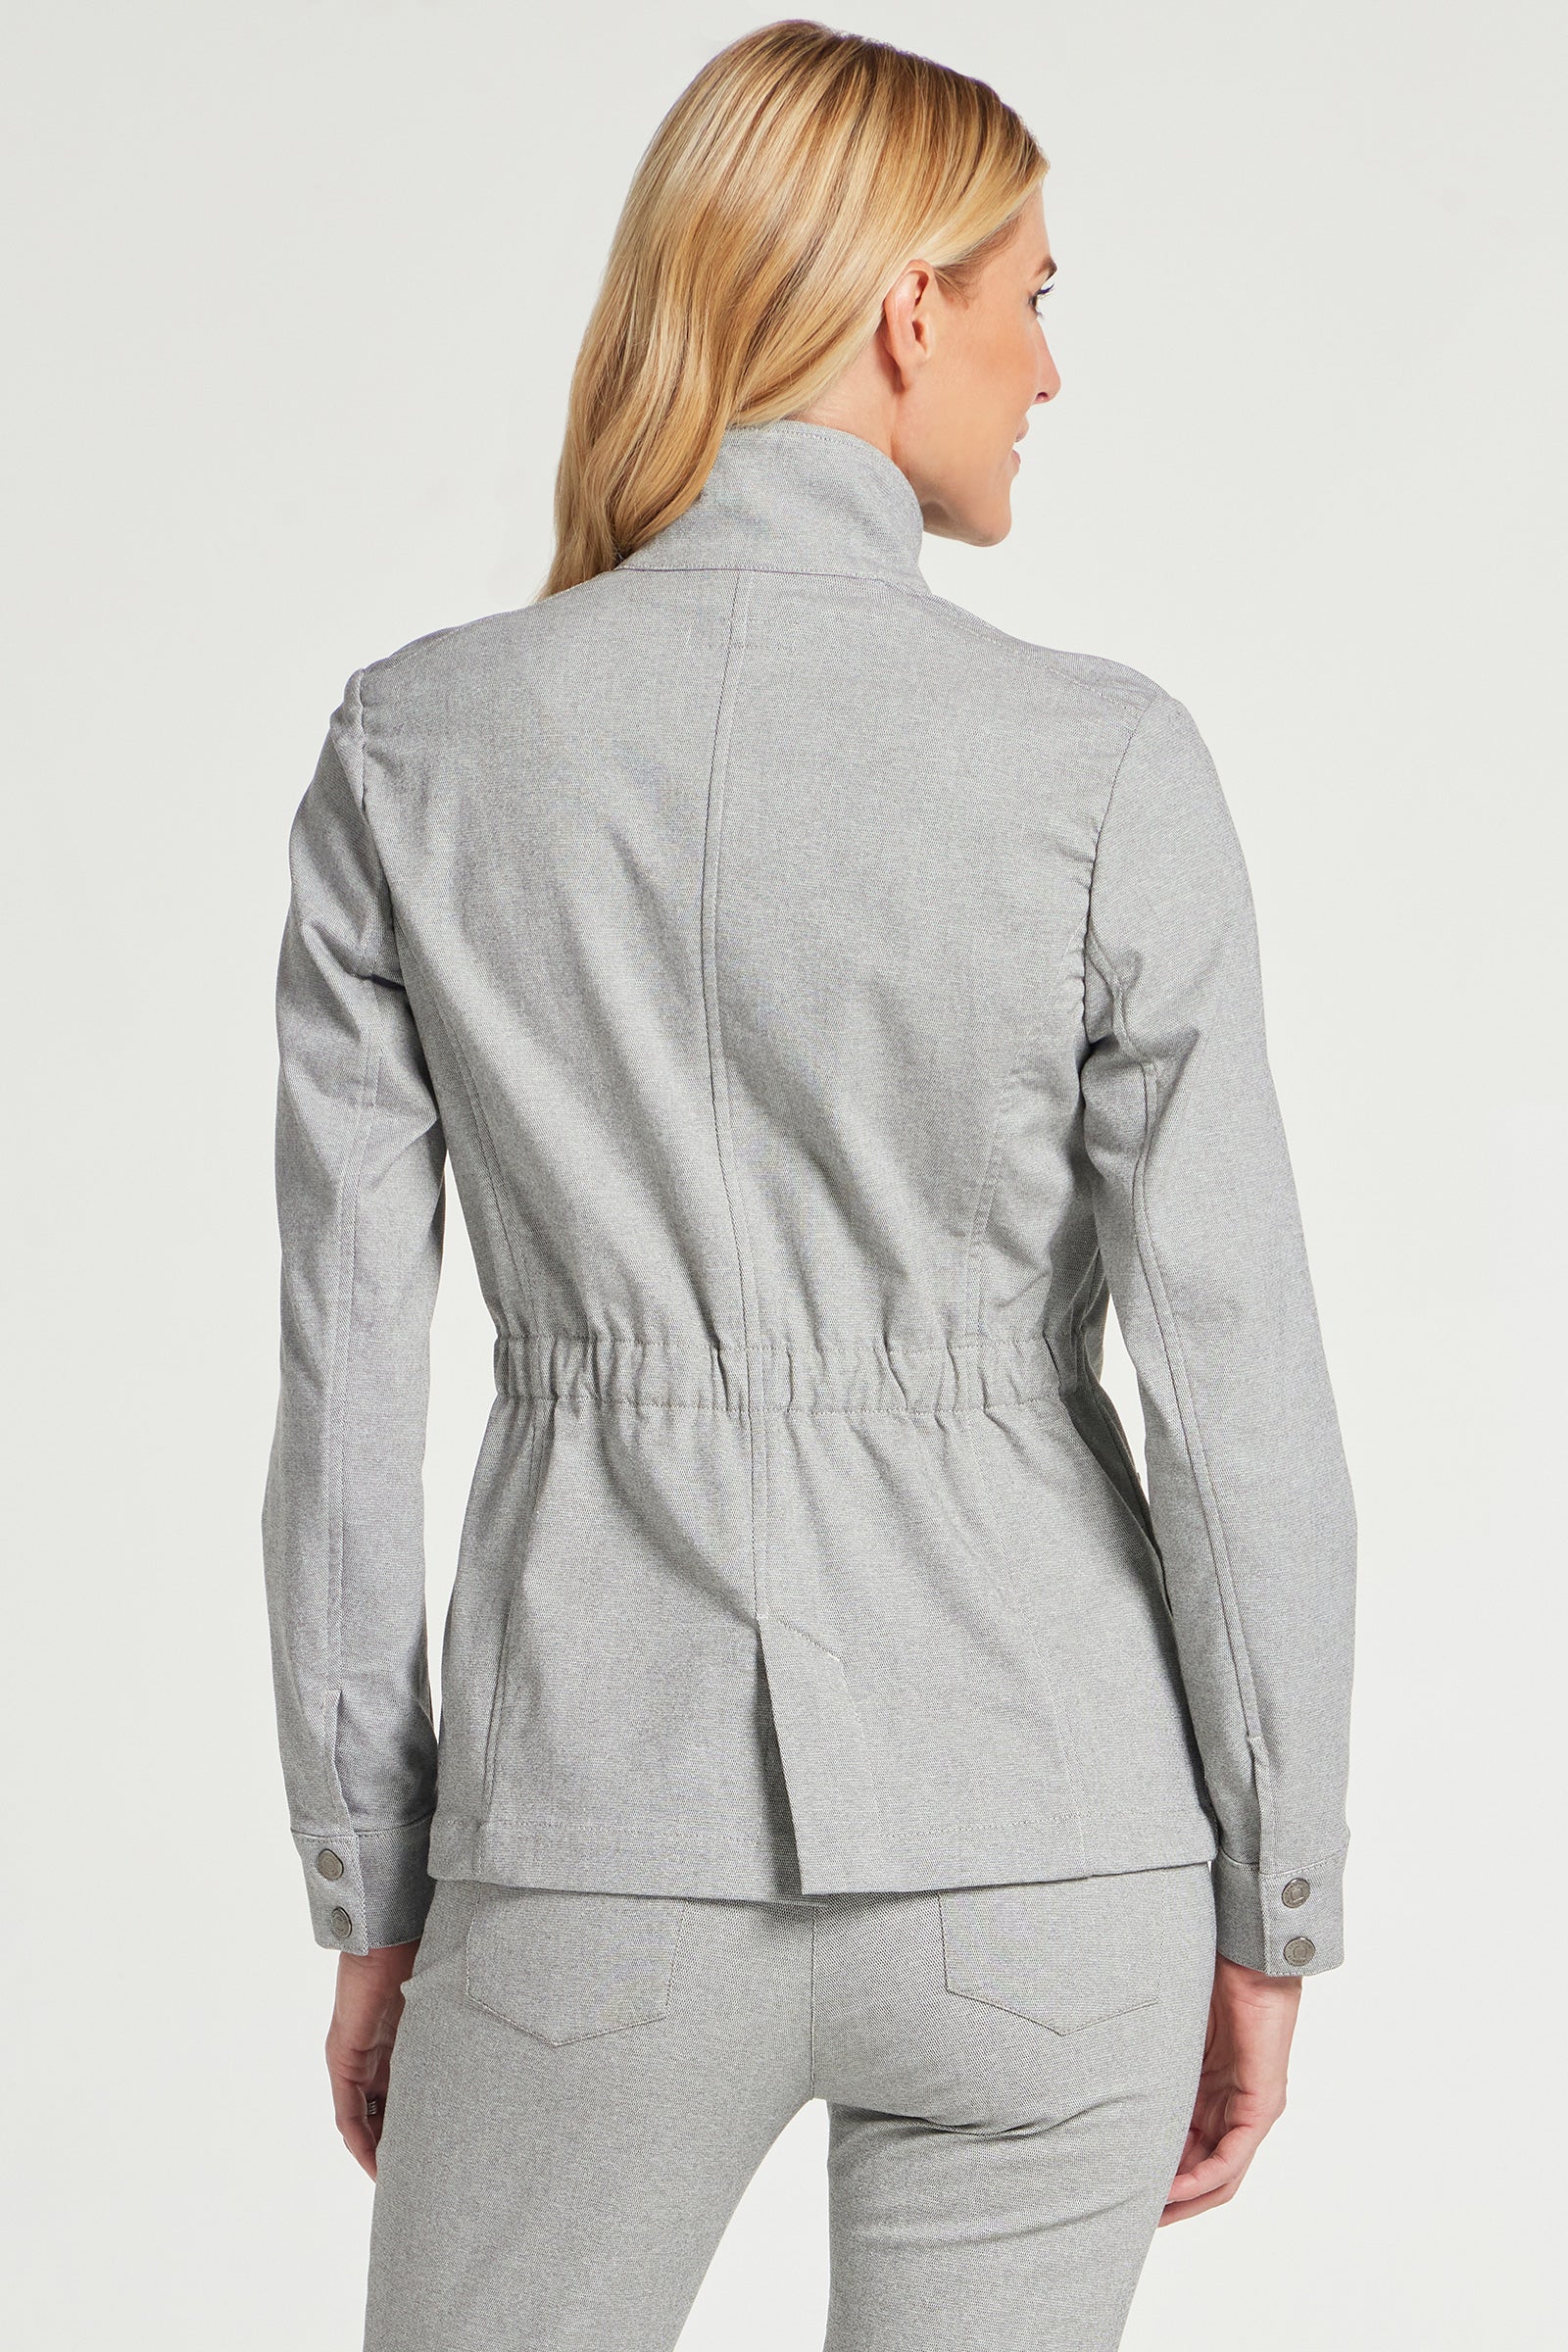 GREY MELANGE || Jane Textured Denim Jacket